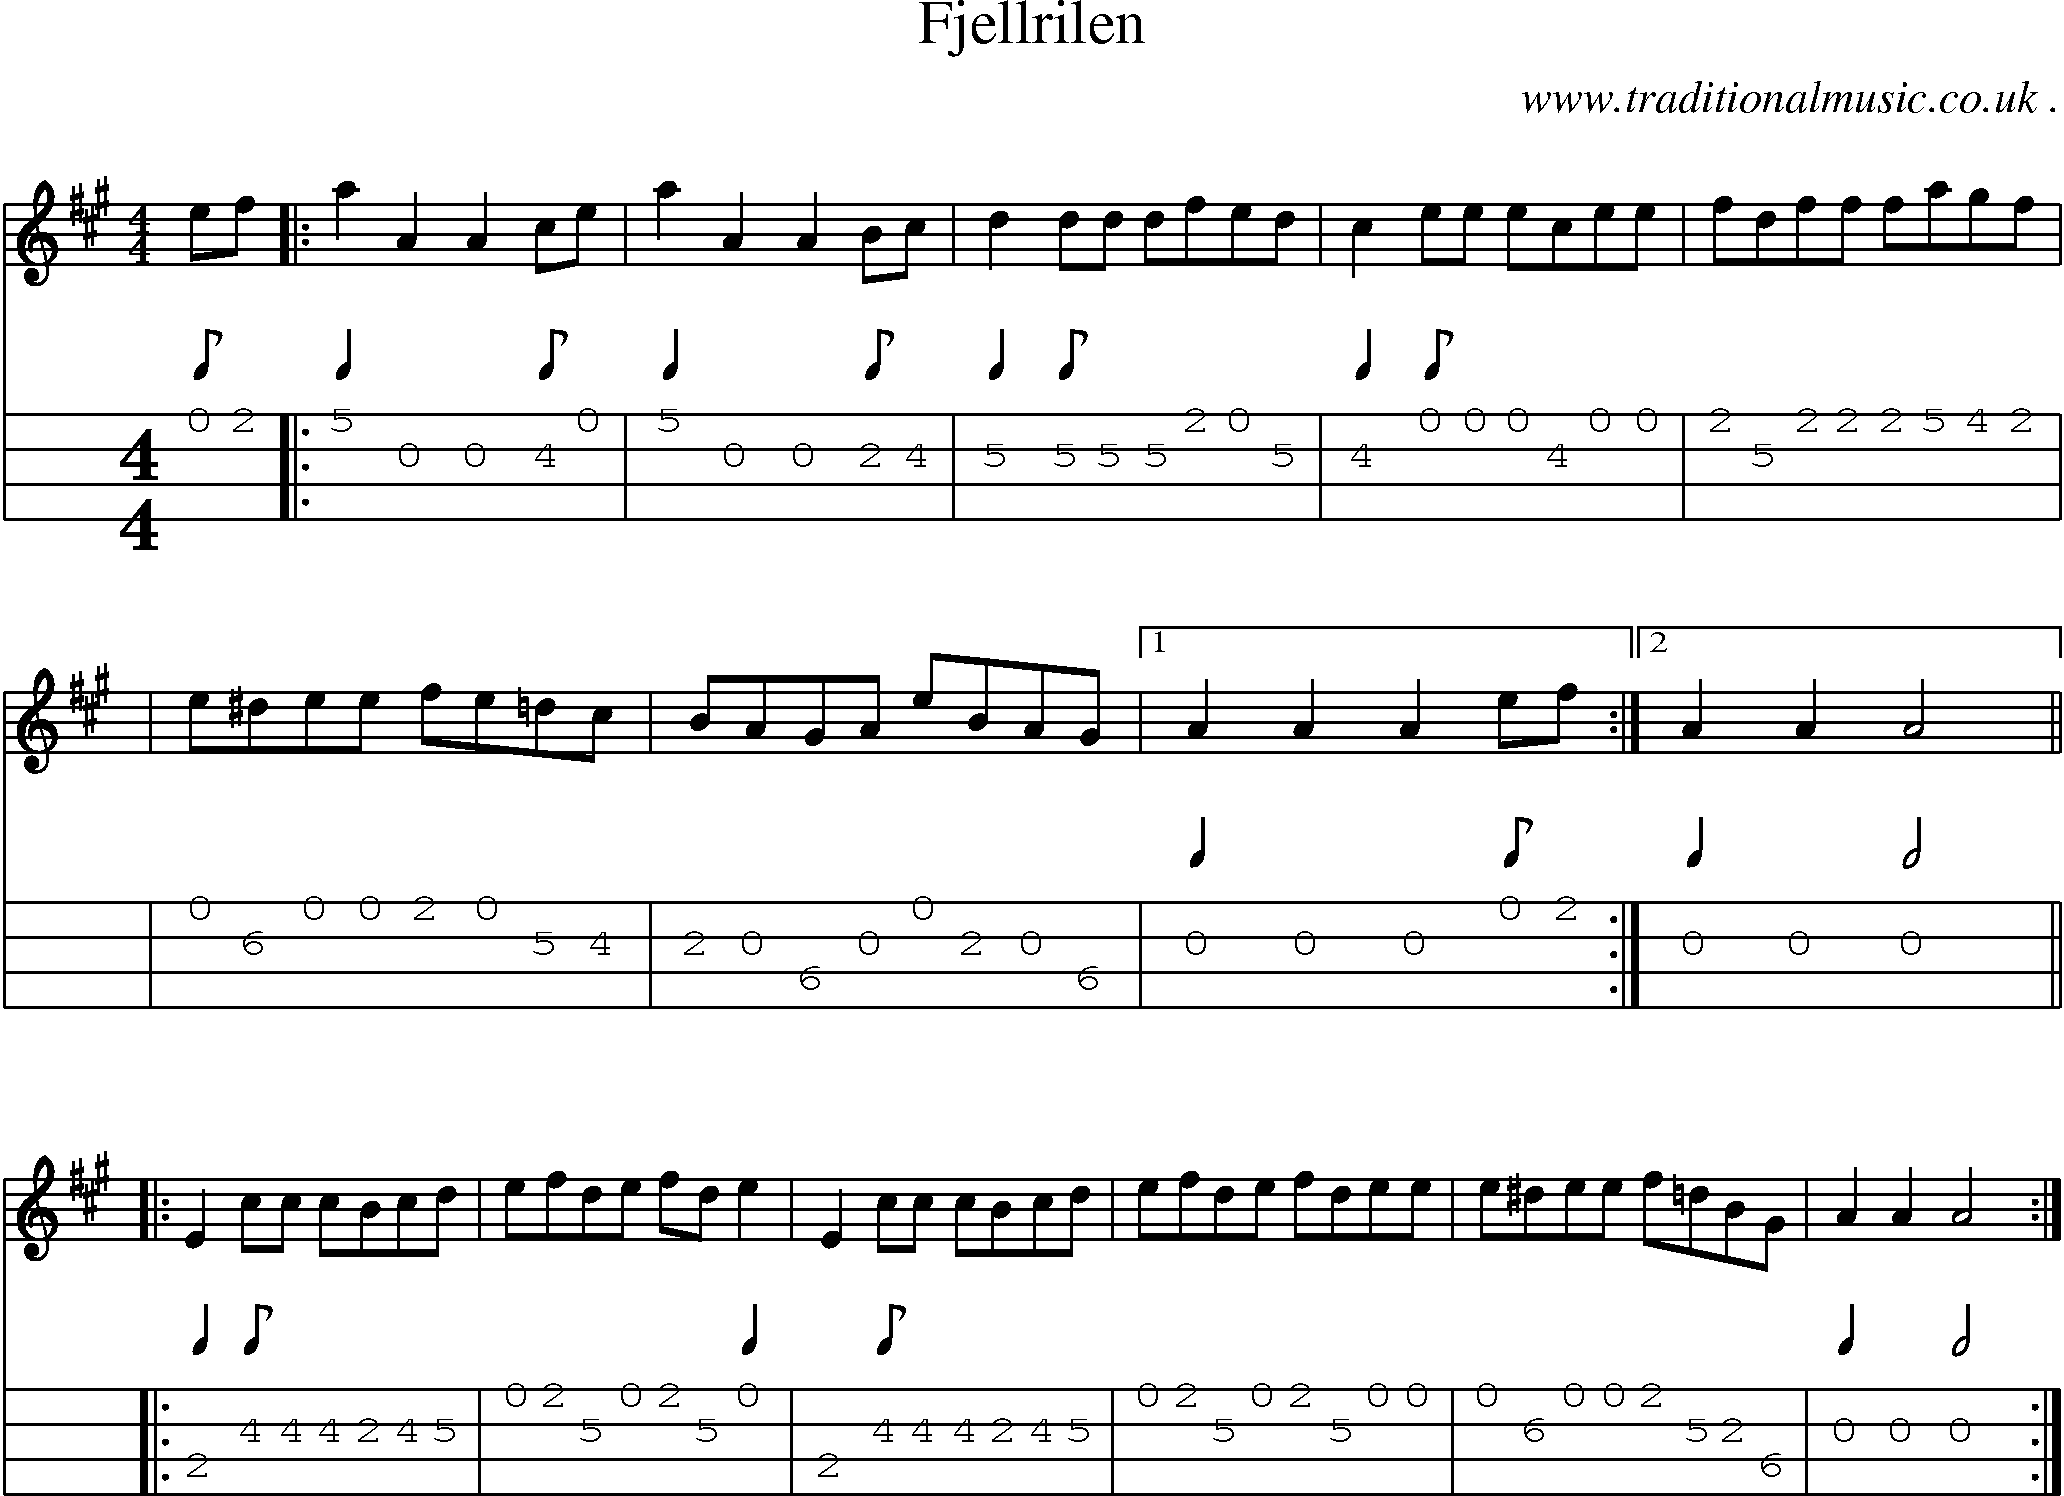 Sheet-music  score, Chords and Mandolin Tabs for Fjellrilen